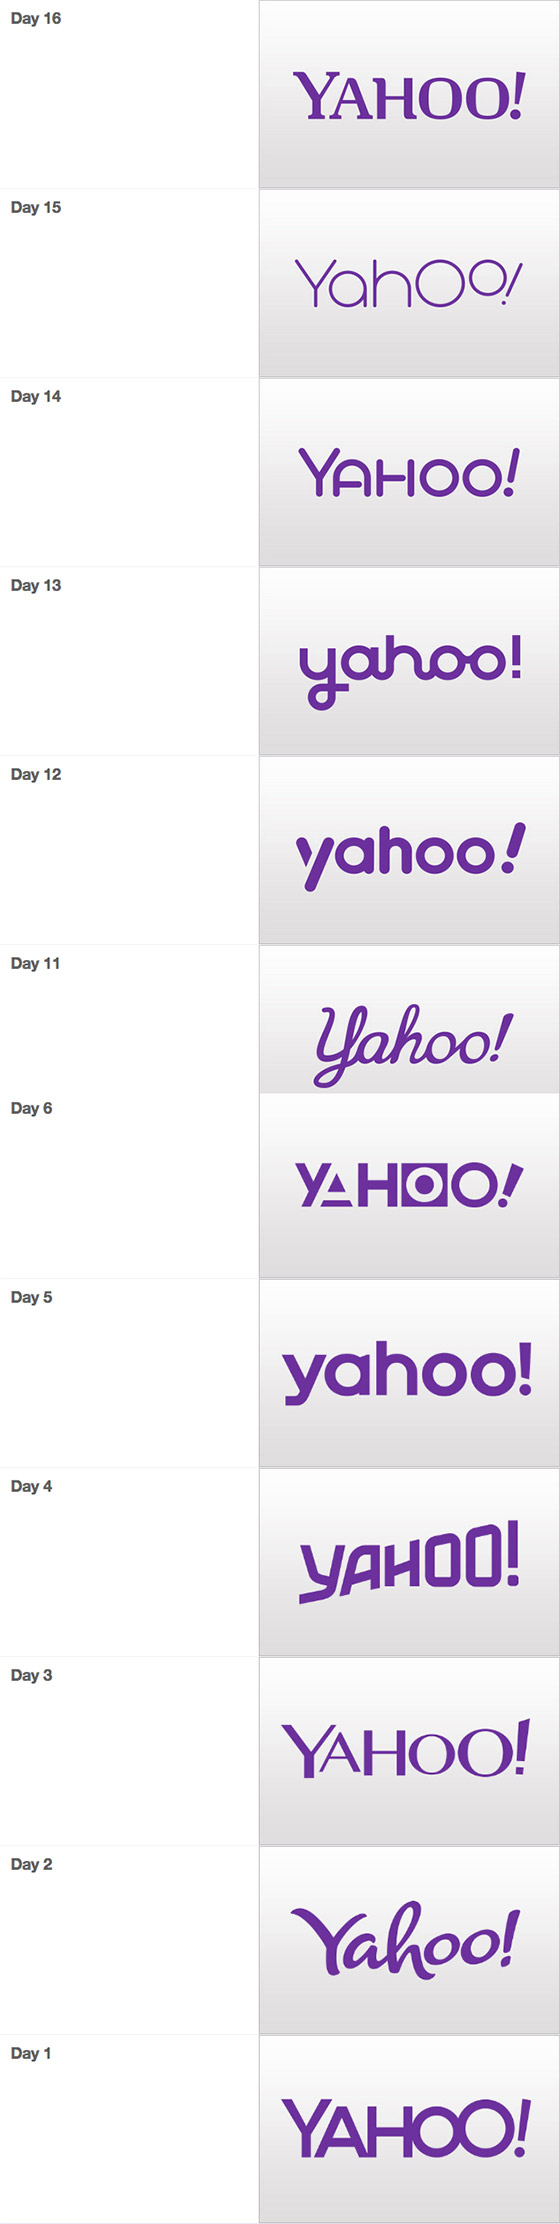 Yahoo 30 days